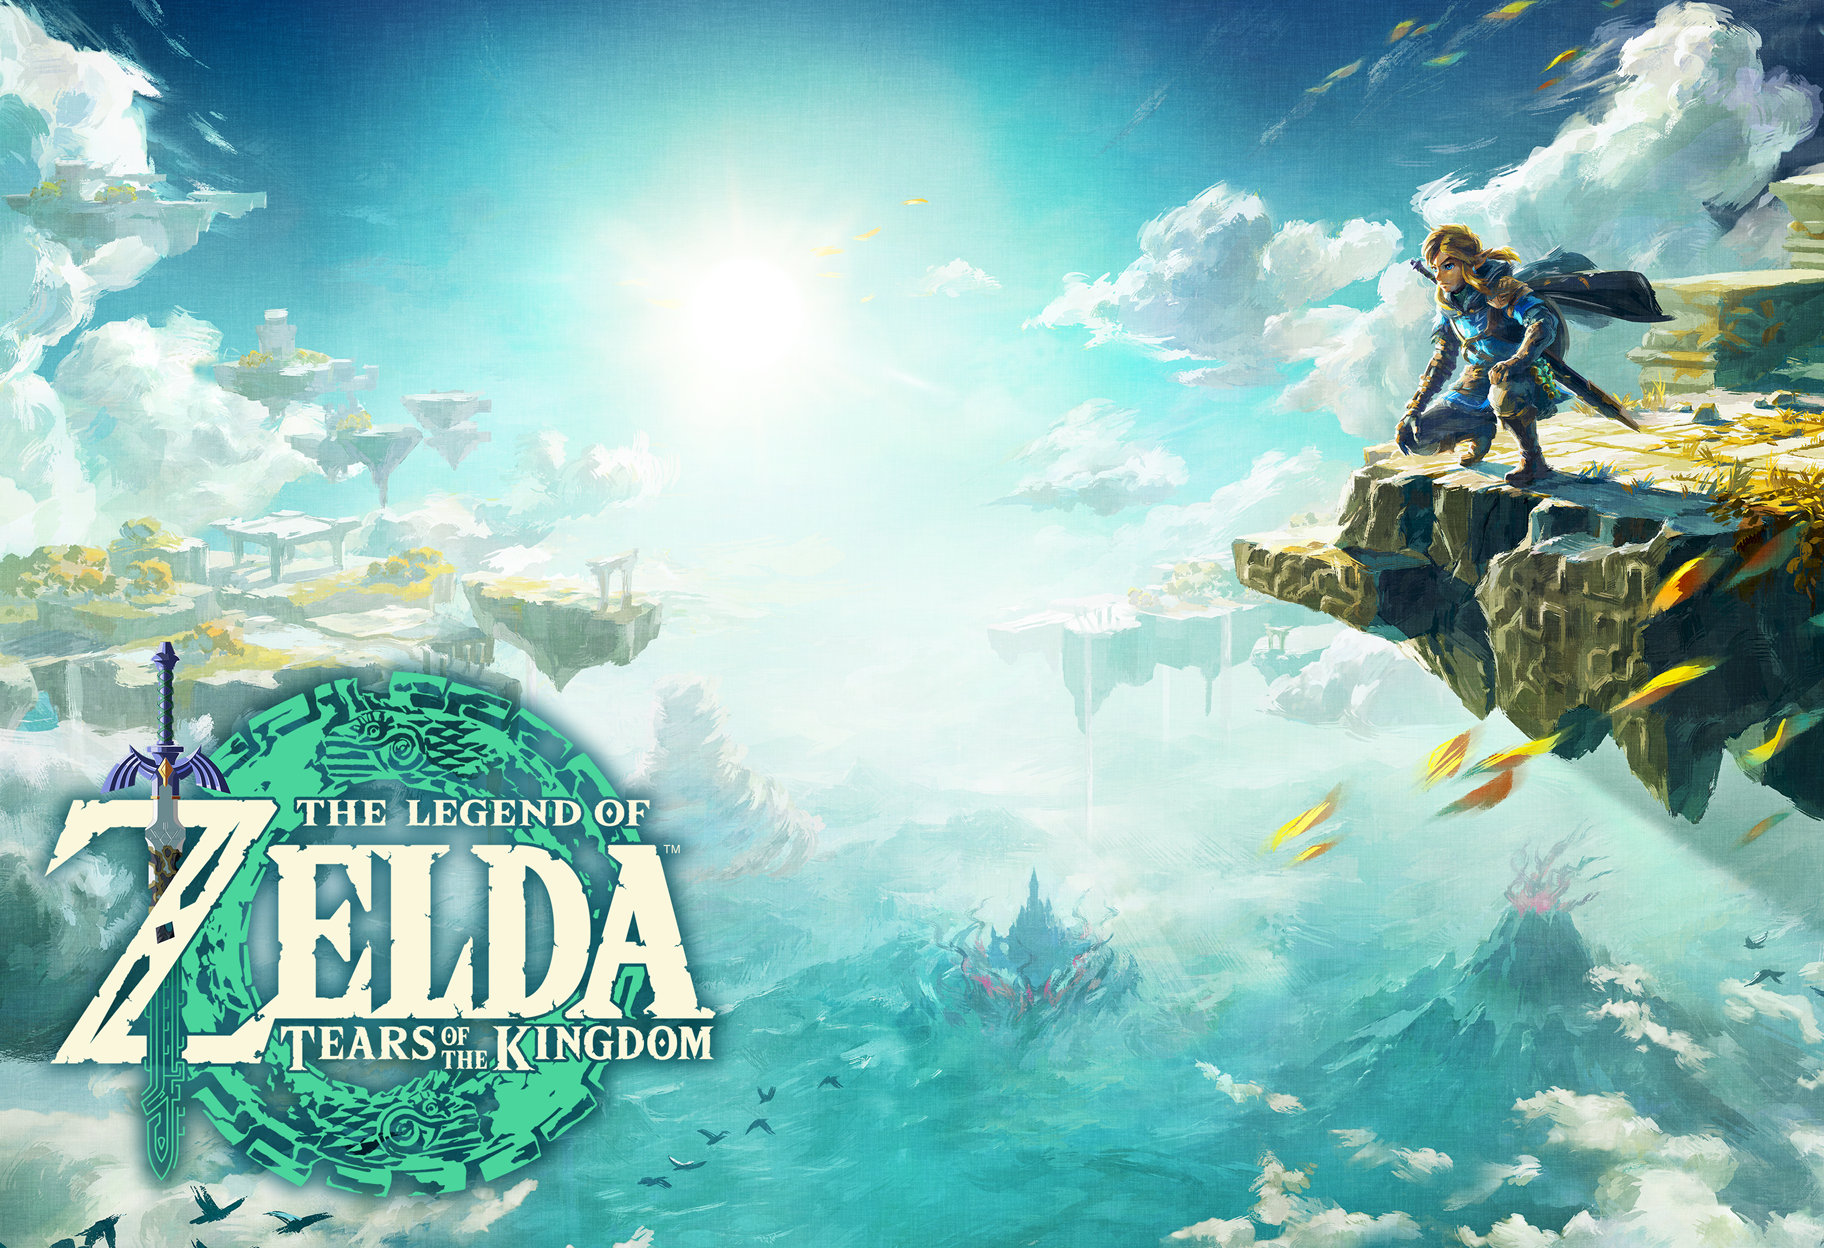 The Legend of Zelda: Tears of the Kingdom Poster 13x19 - Etsy Ireland